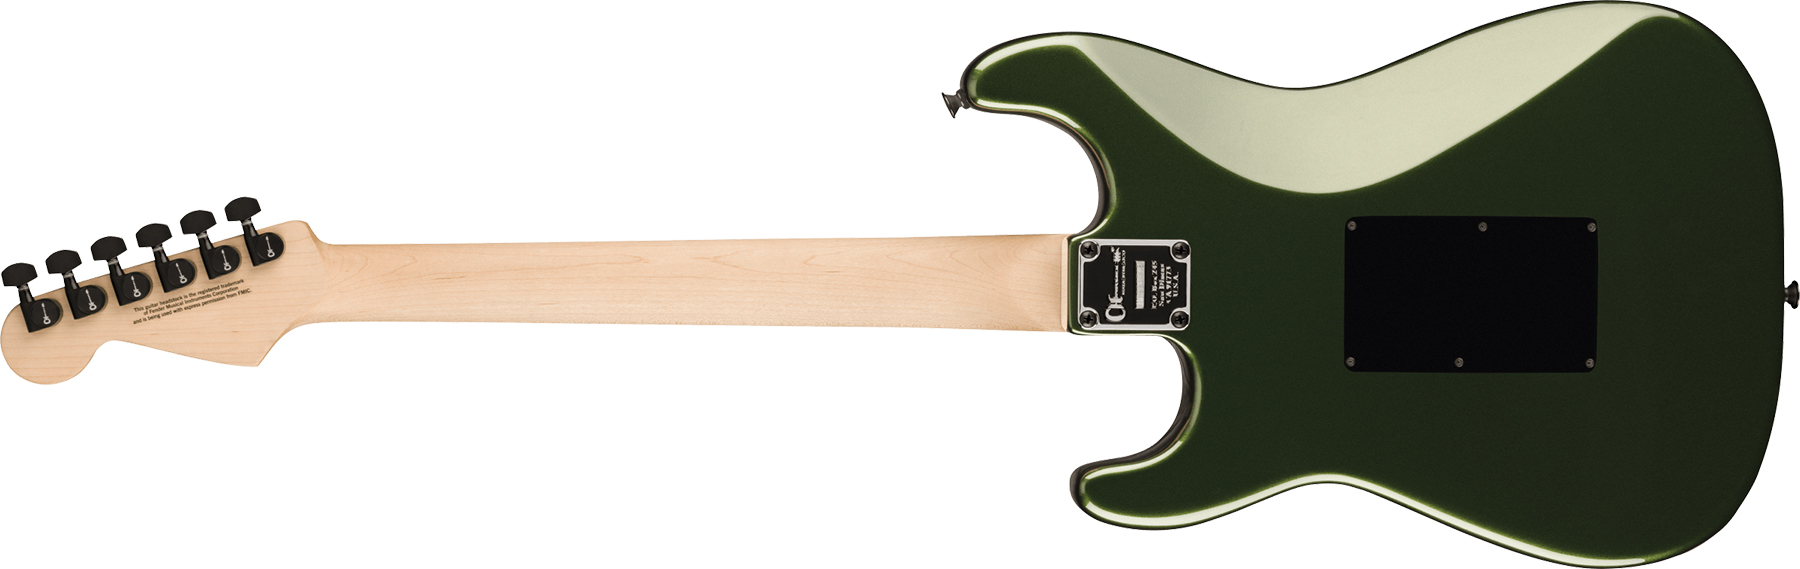 Charvel So-cal Style 1 Hss Fr E Pro-mod Seymour Duncan Eb - Lambo Green - Elektrische gitaar in Str-vorm - Variation 1